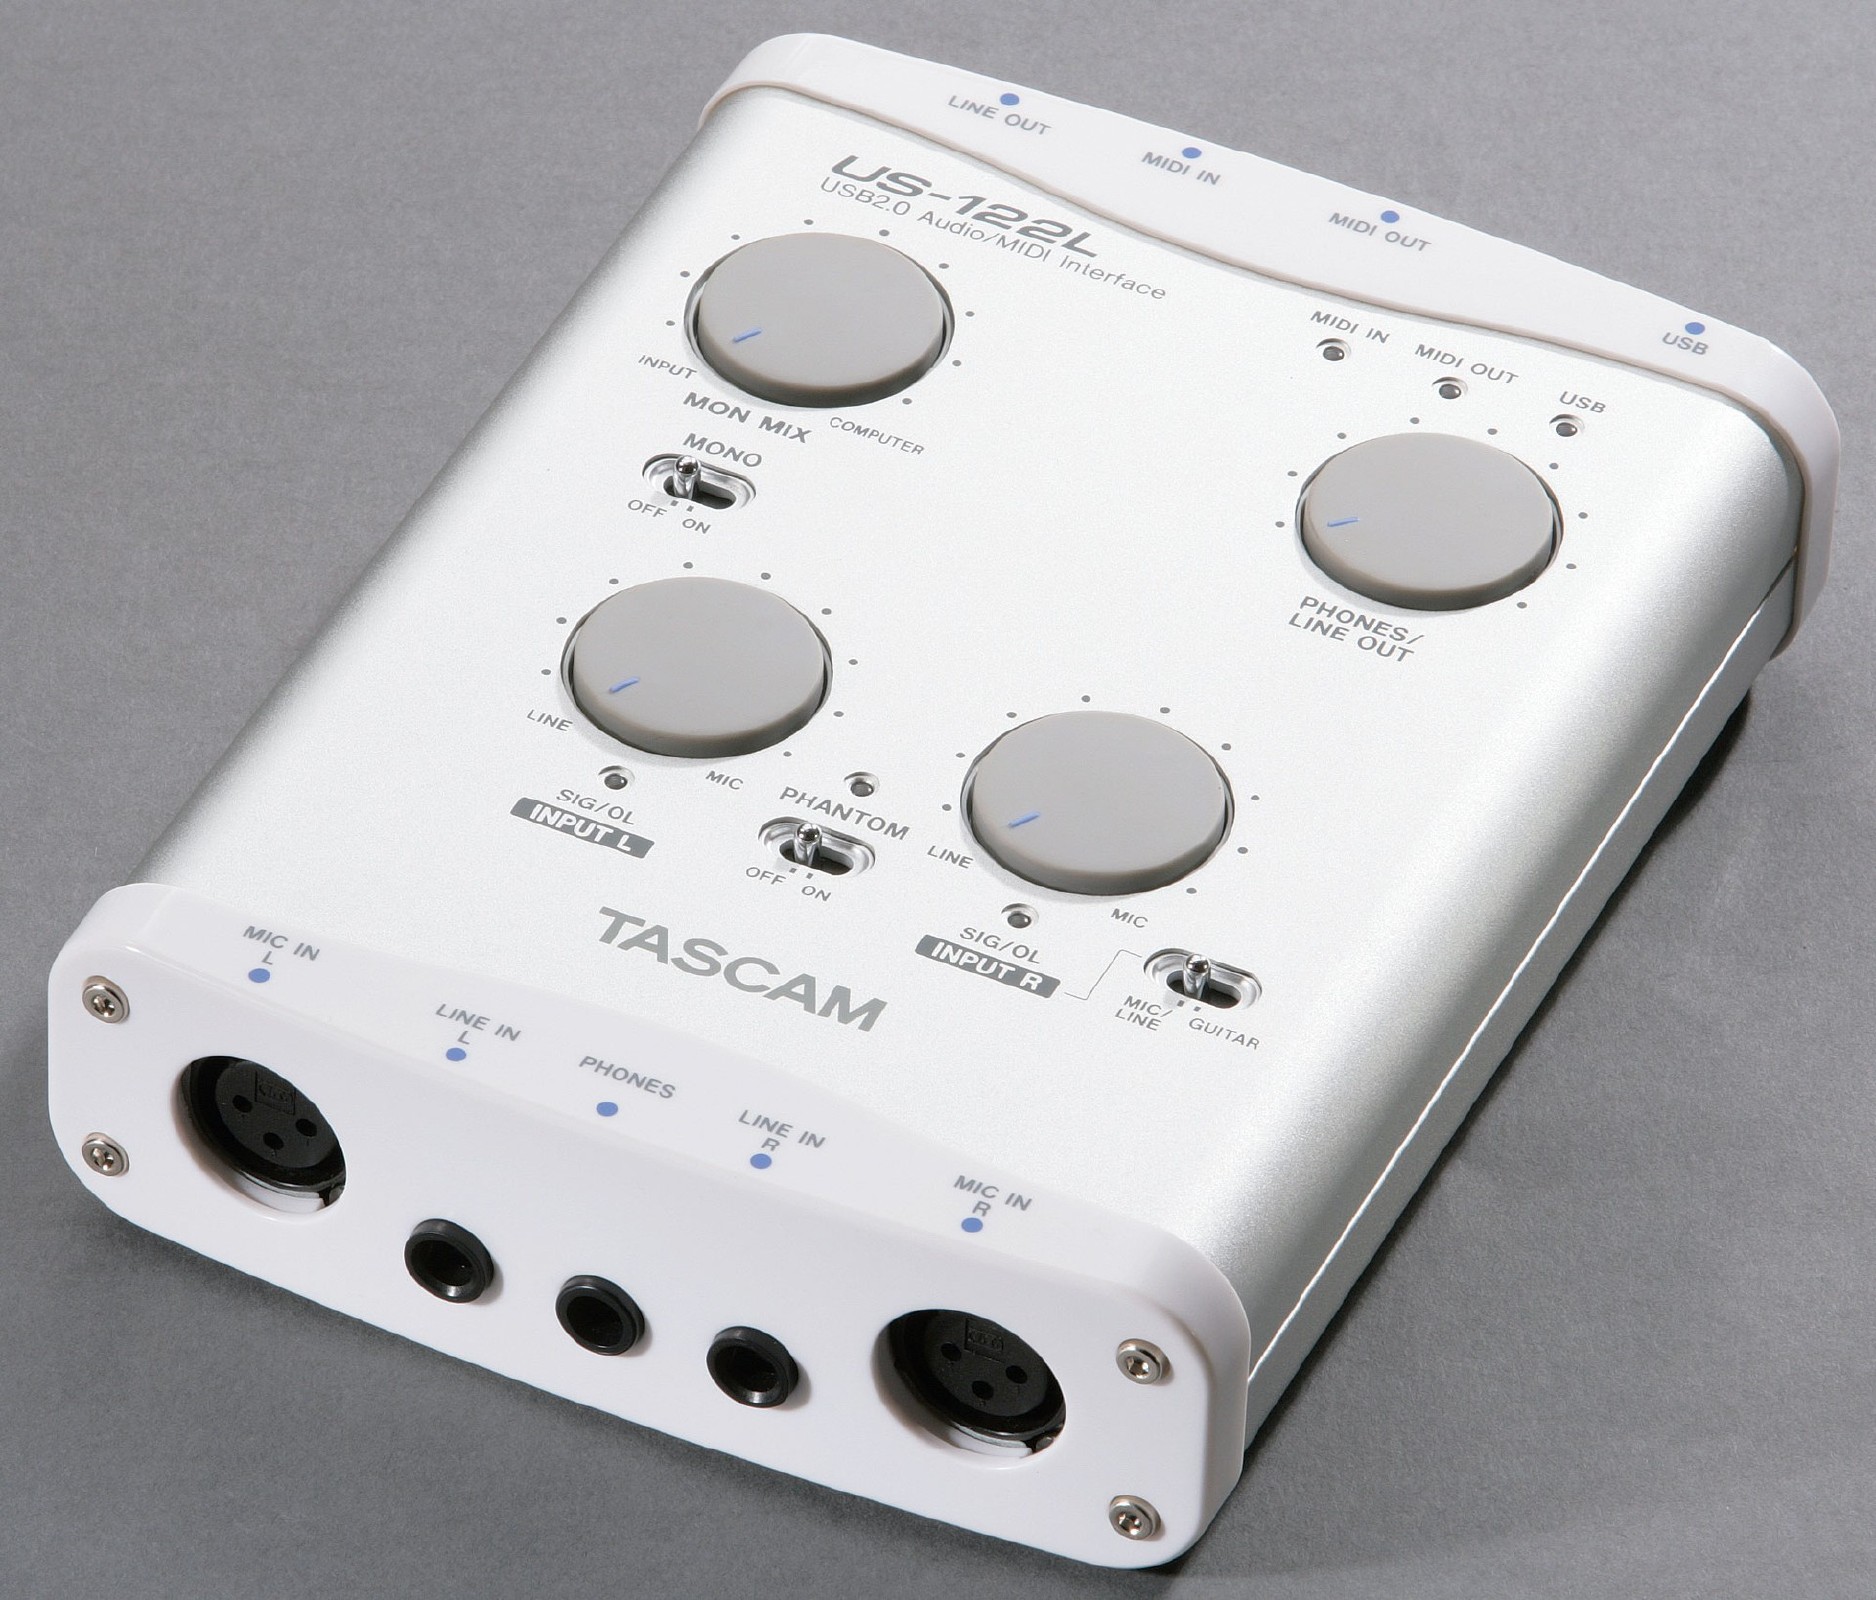 TASCAM Us-122 USB Audio Midi Interface CDs Gigstudio24 for sale online